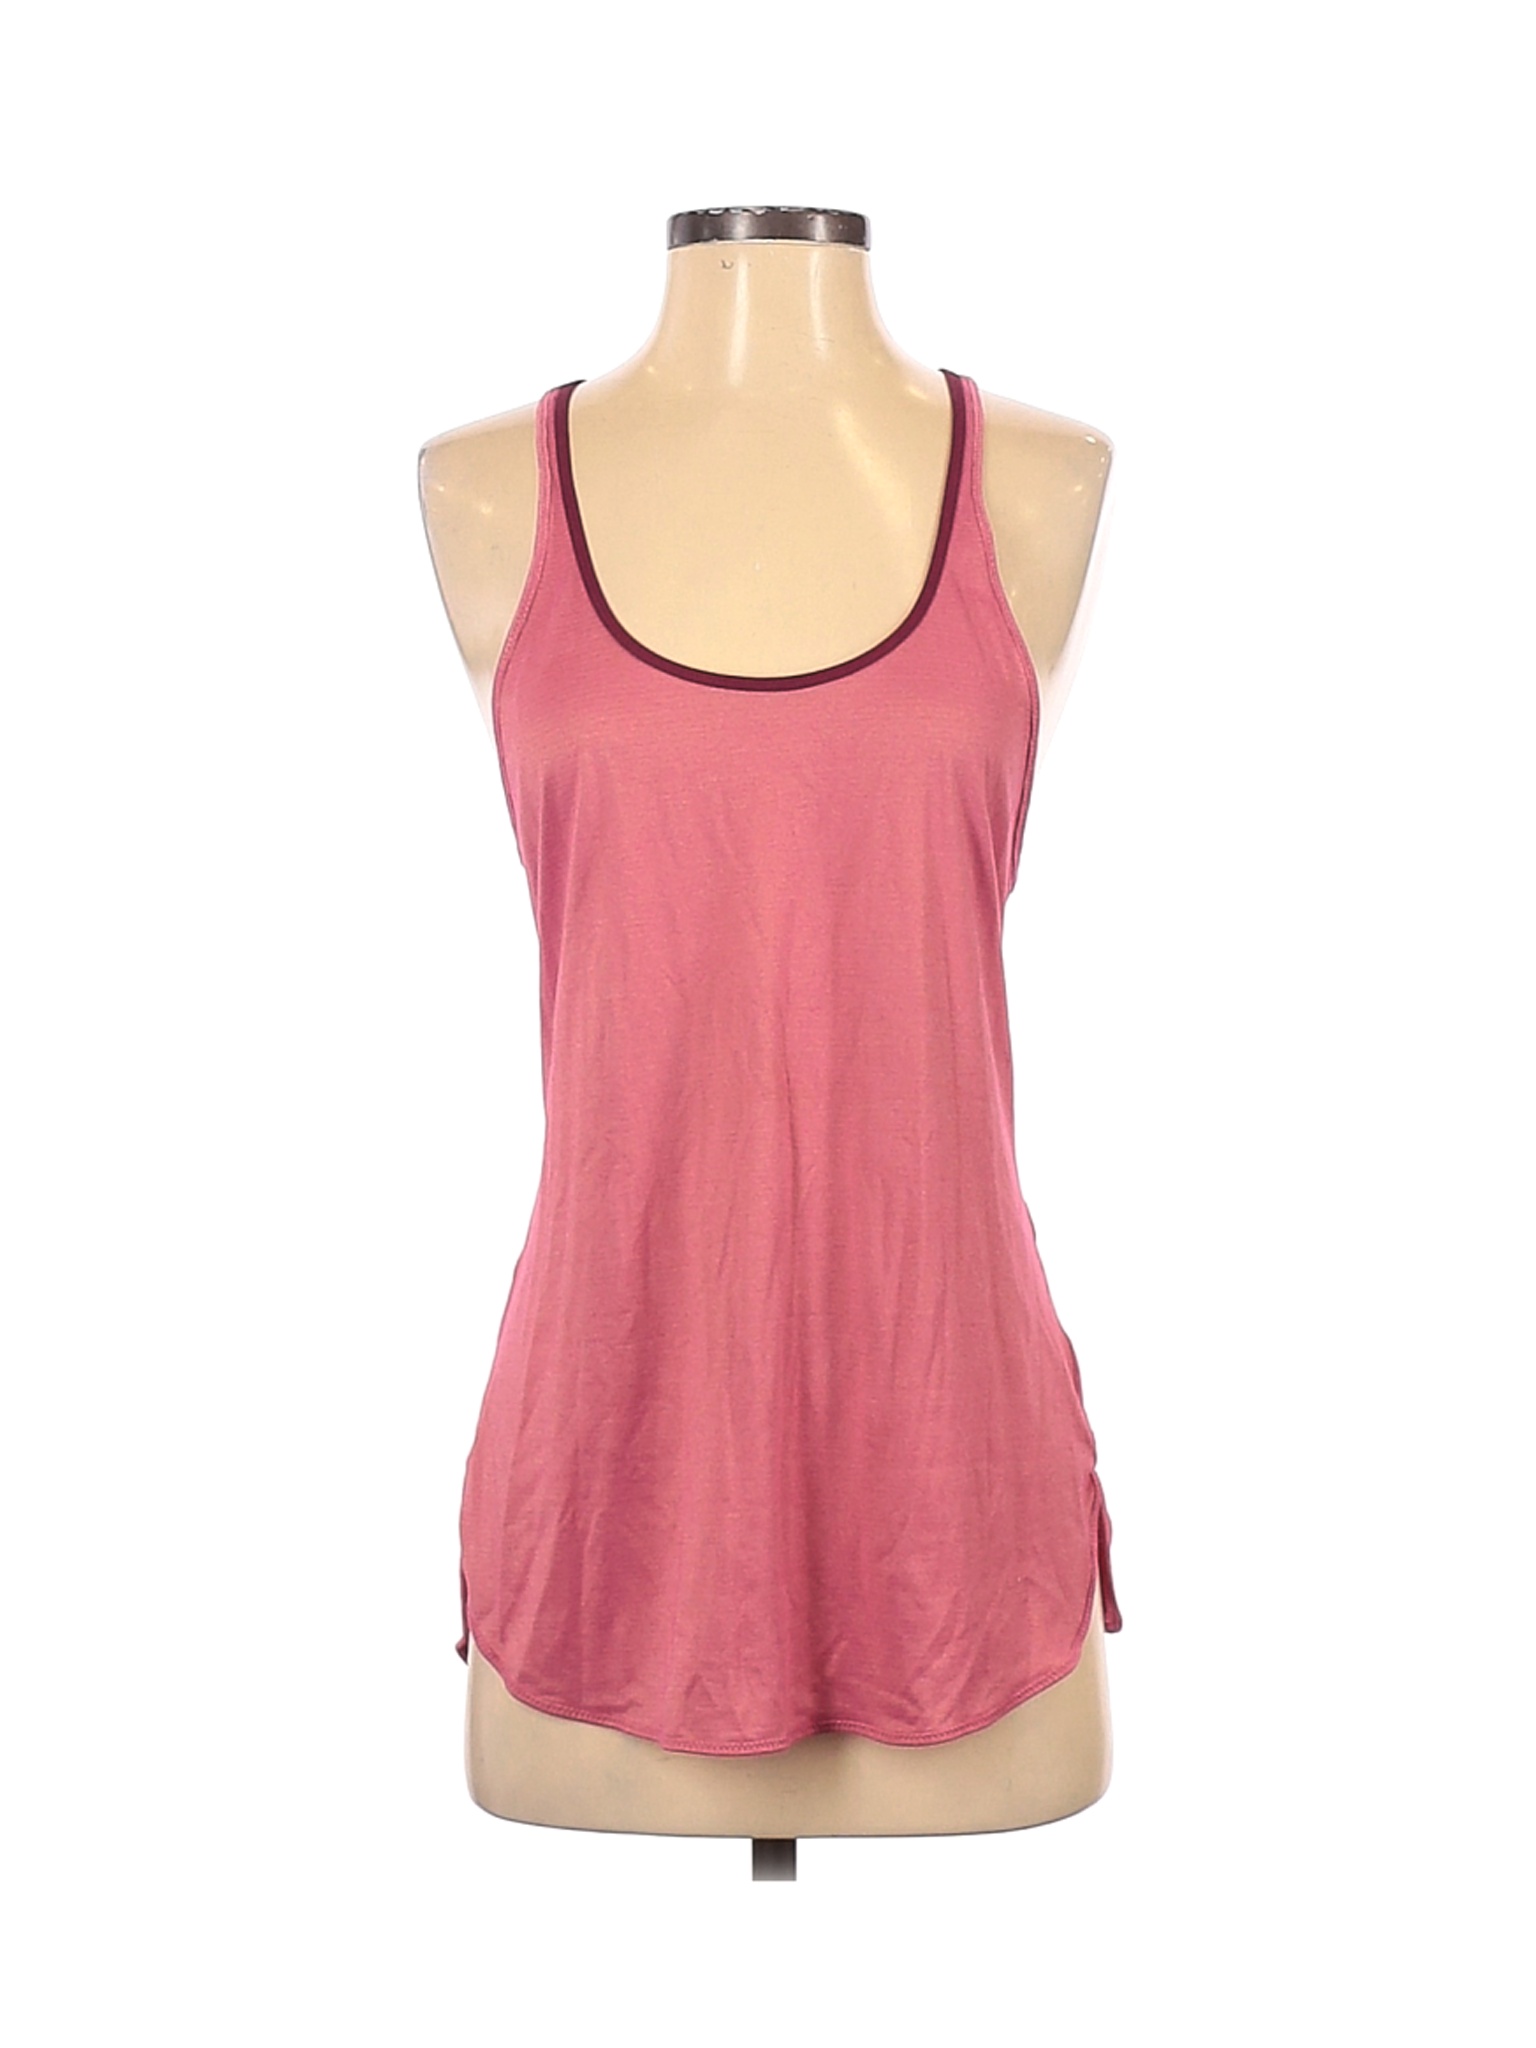 Lululemon Athletica Women Pink Active T-Shirt 4 | eBay